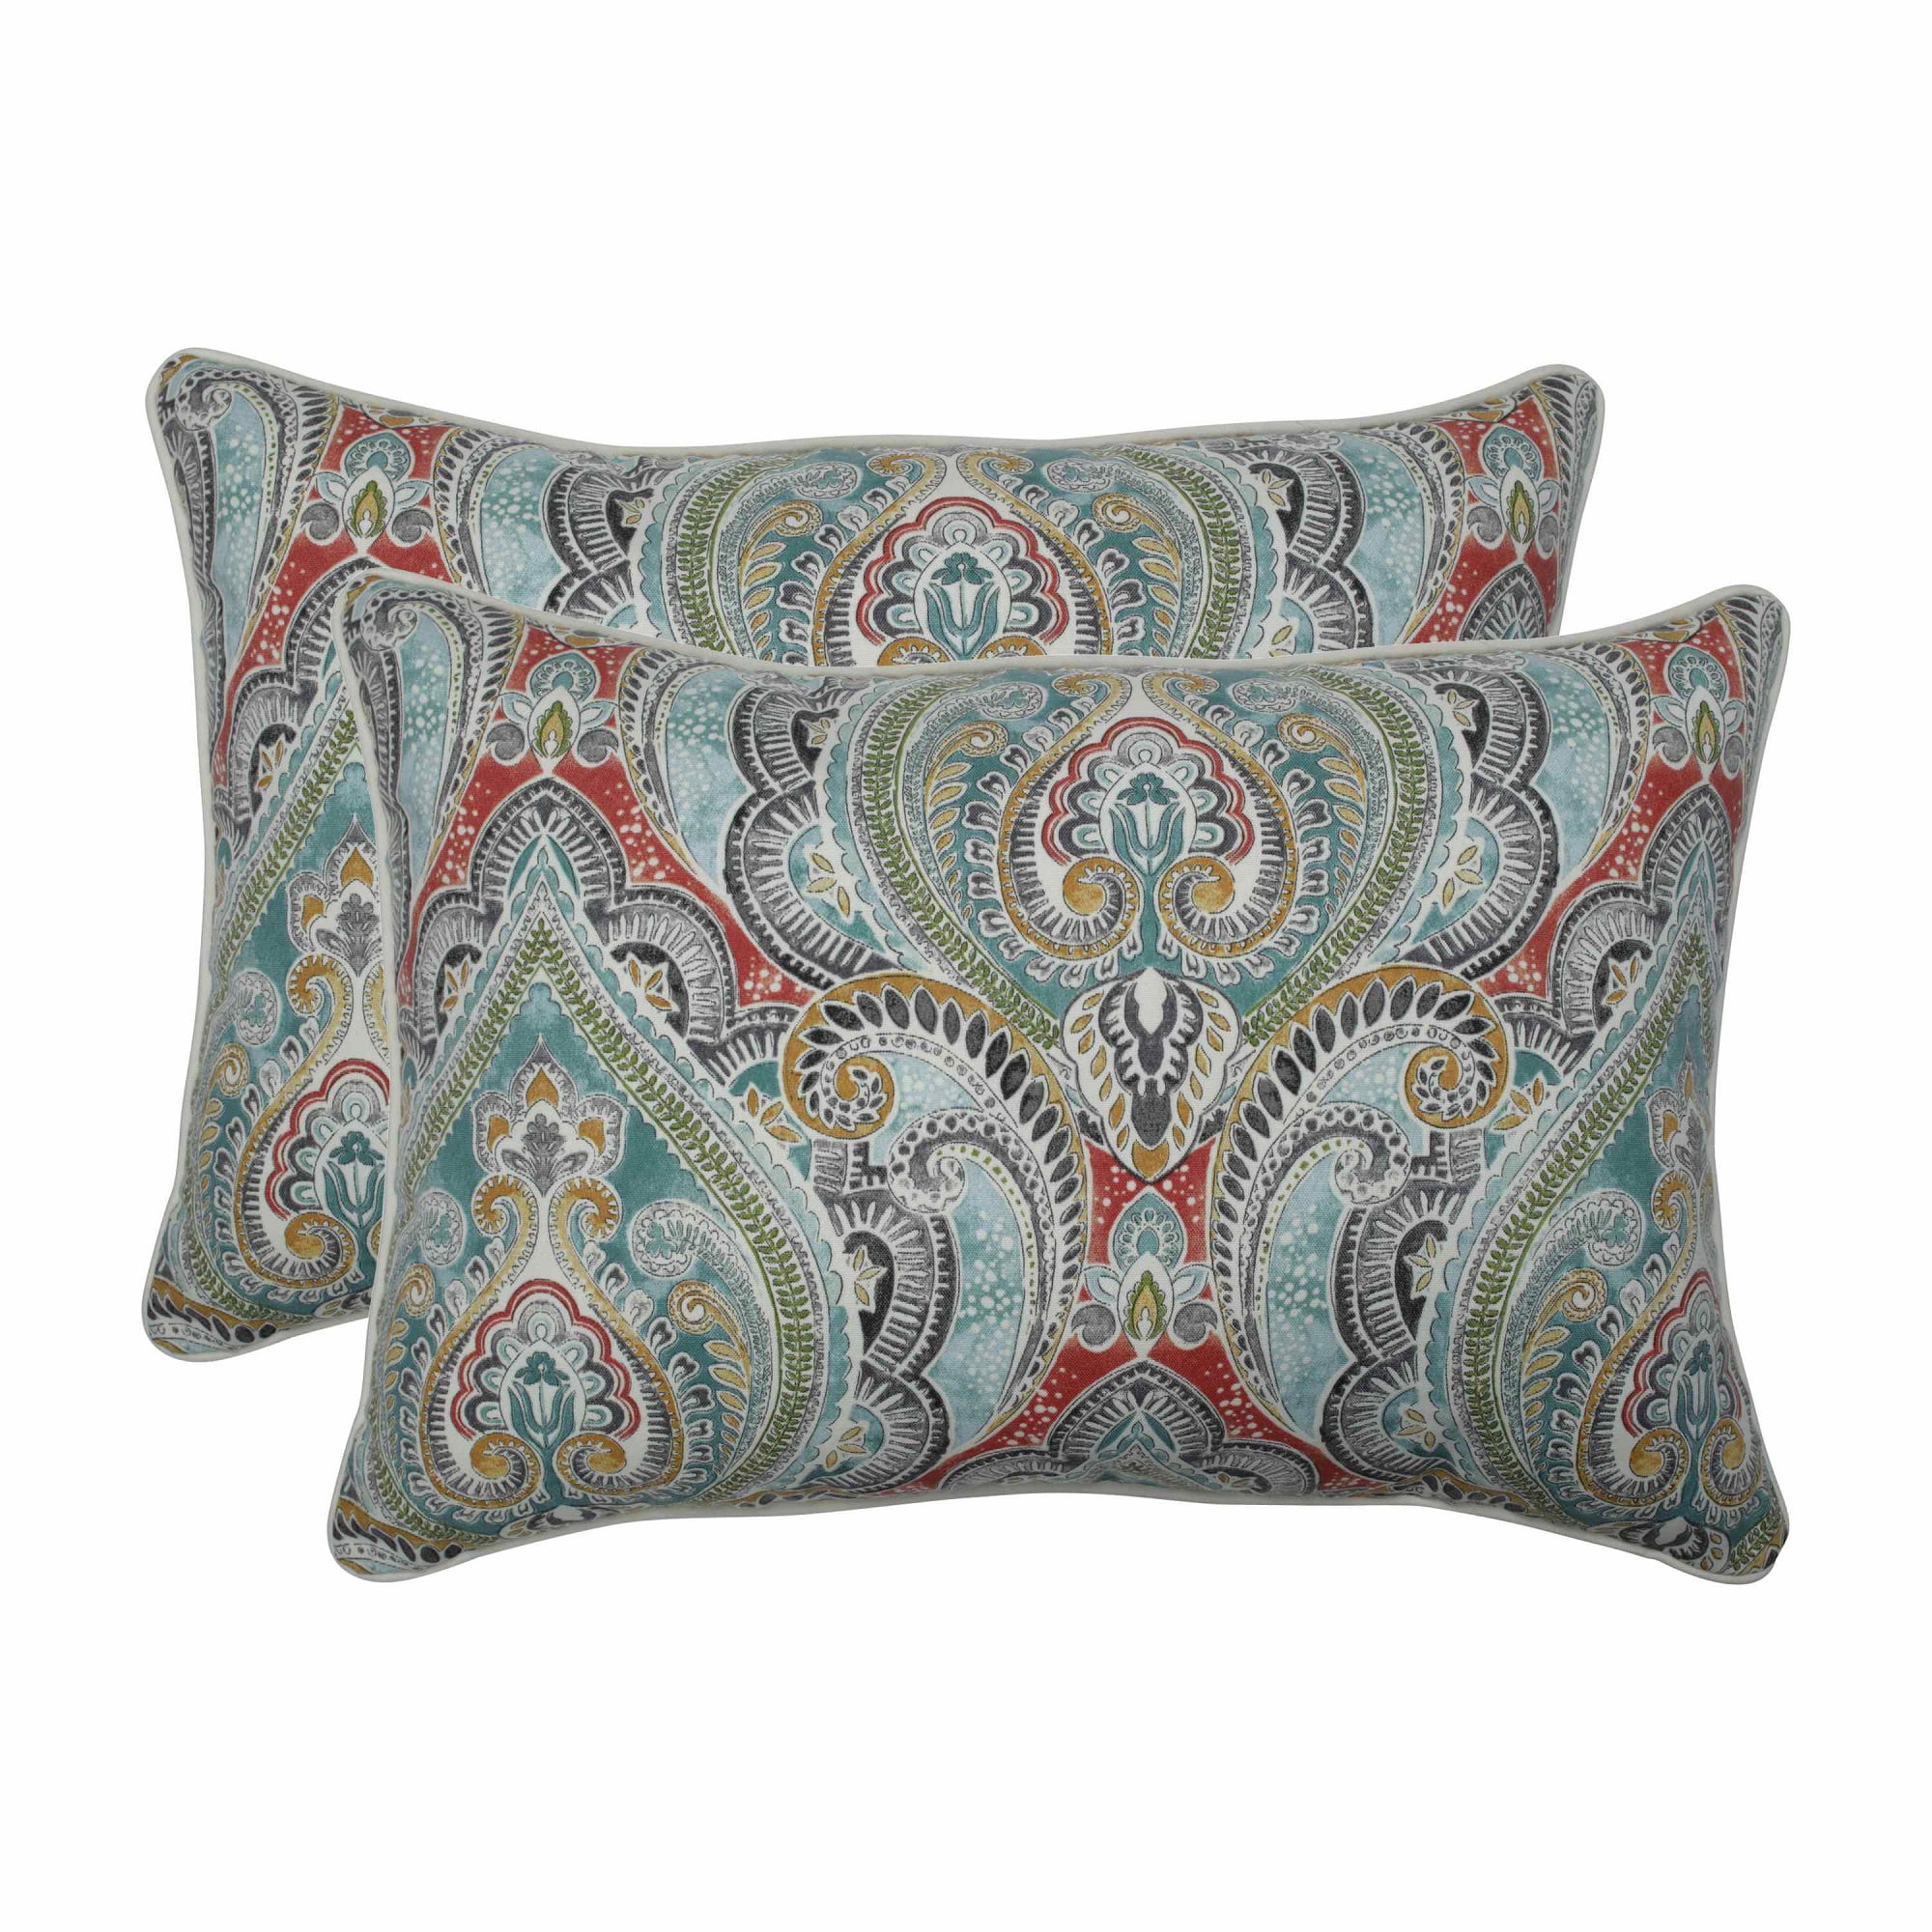 Set of 2 Vibrantly Colored Damask Pattern Rectangular Throw Pillows 24.5"